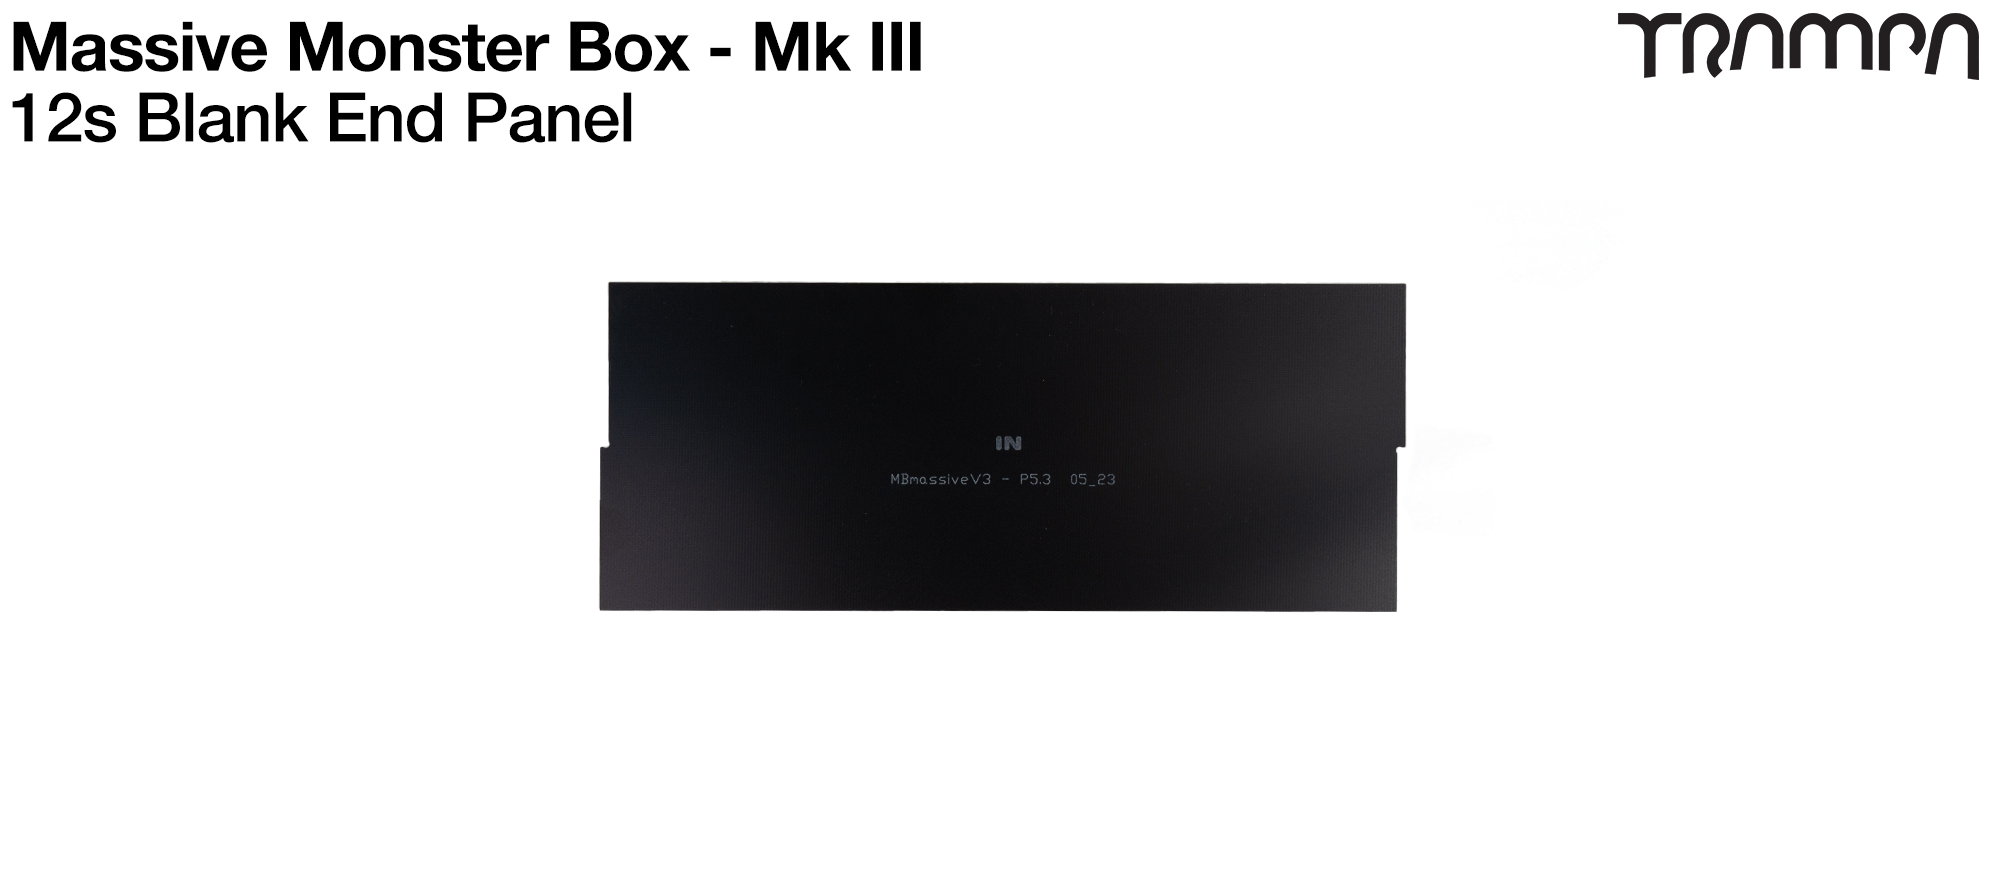 Mk III Massive Monster Box 12s - END Panel BLANK 